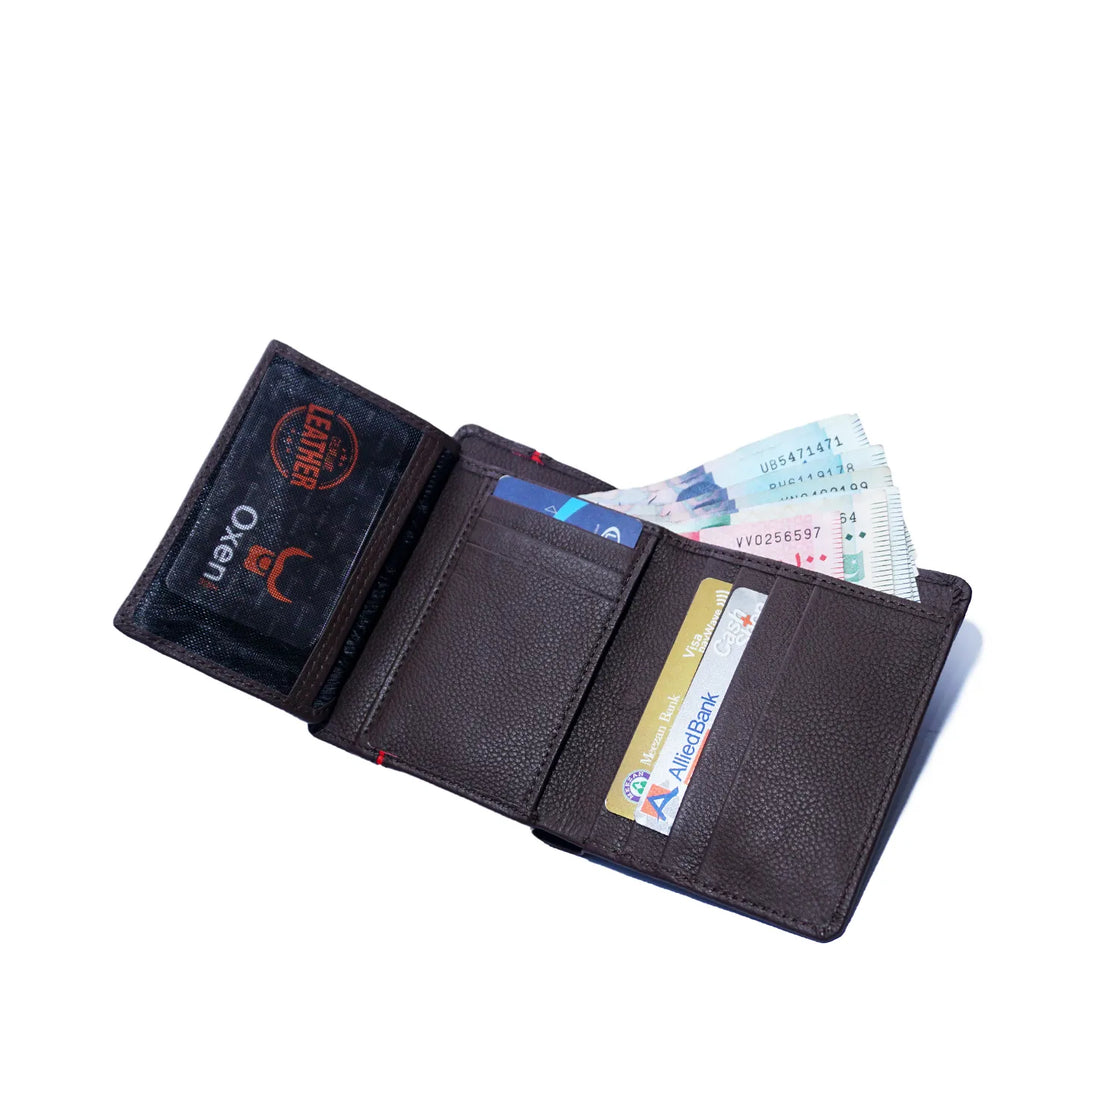 Verax Dark Brown Leather Wallet